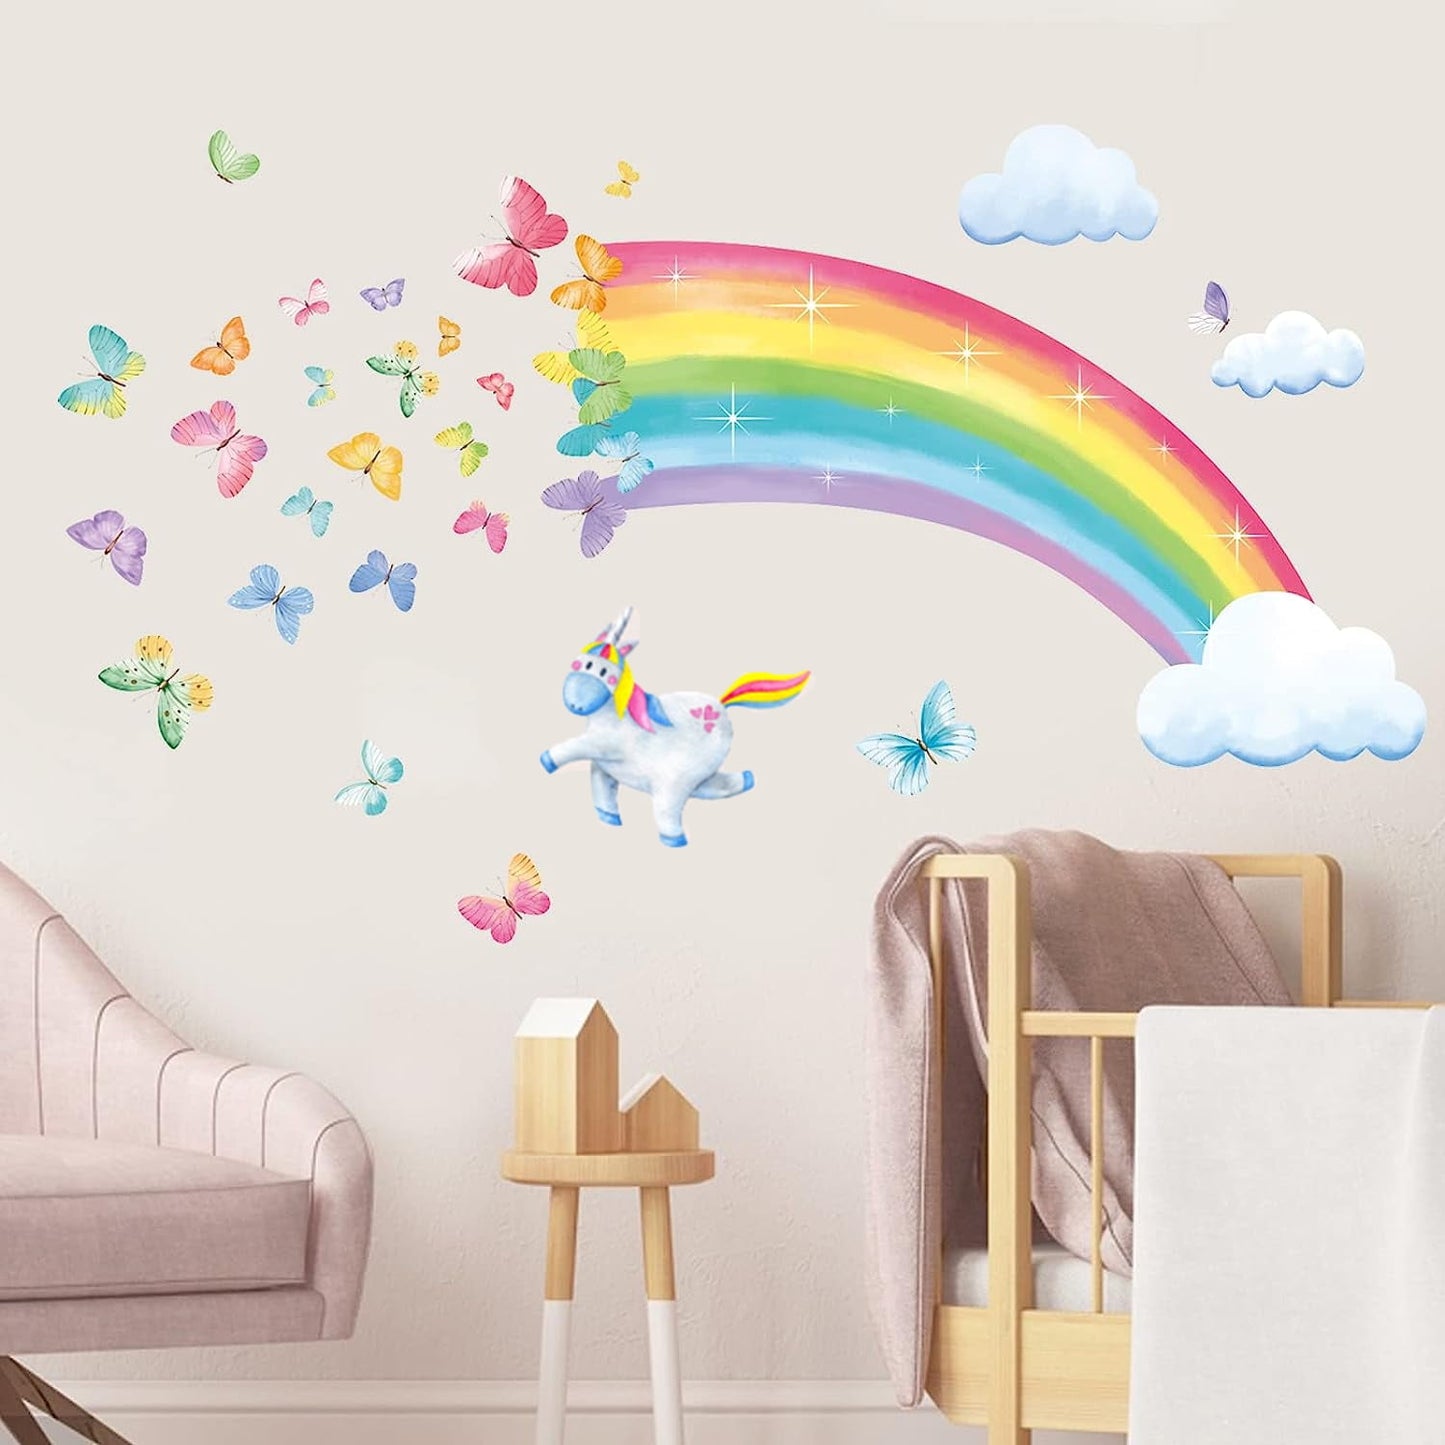 Rainbow Fantasy Room Decals - Unicorn & Butterflies Wall Art